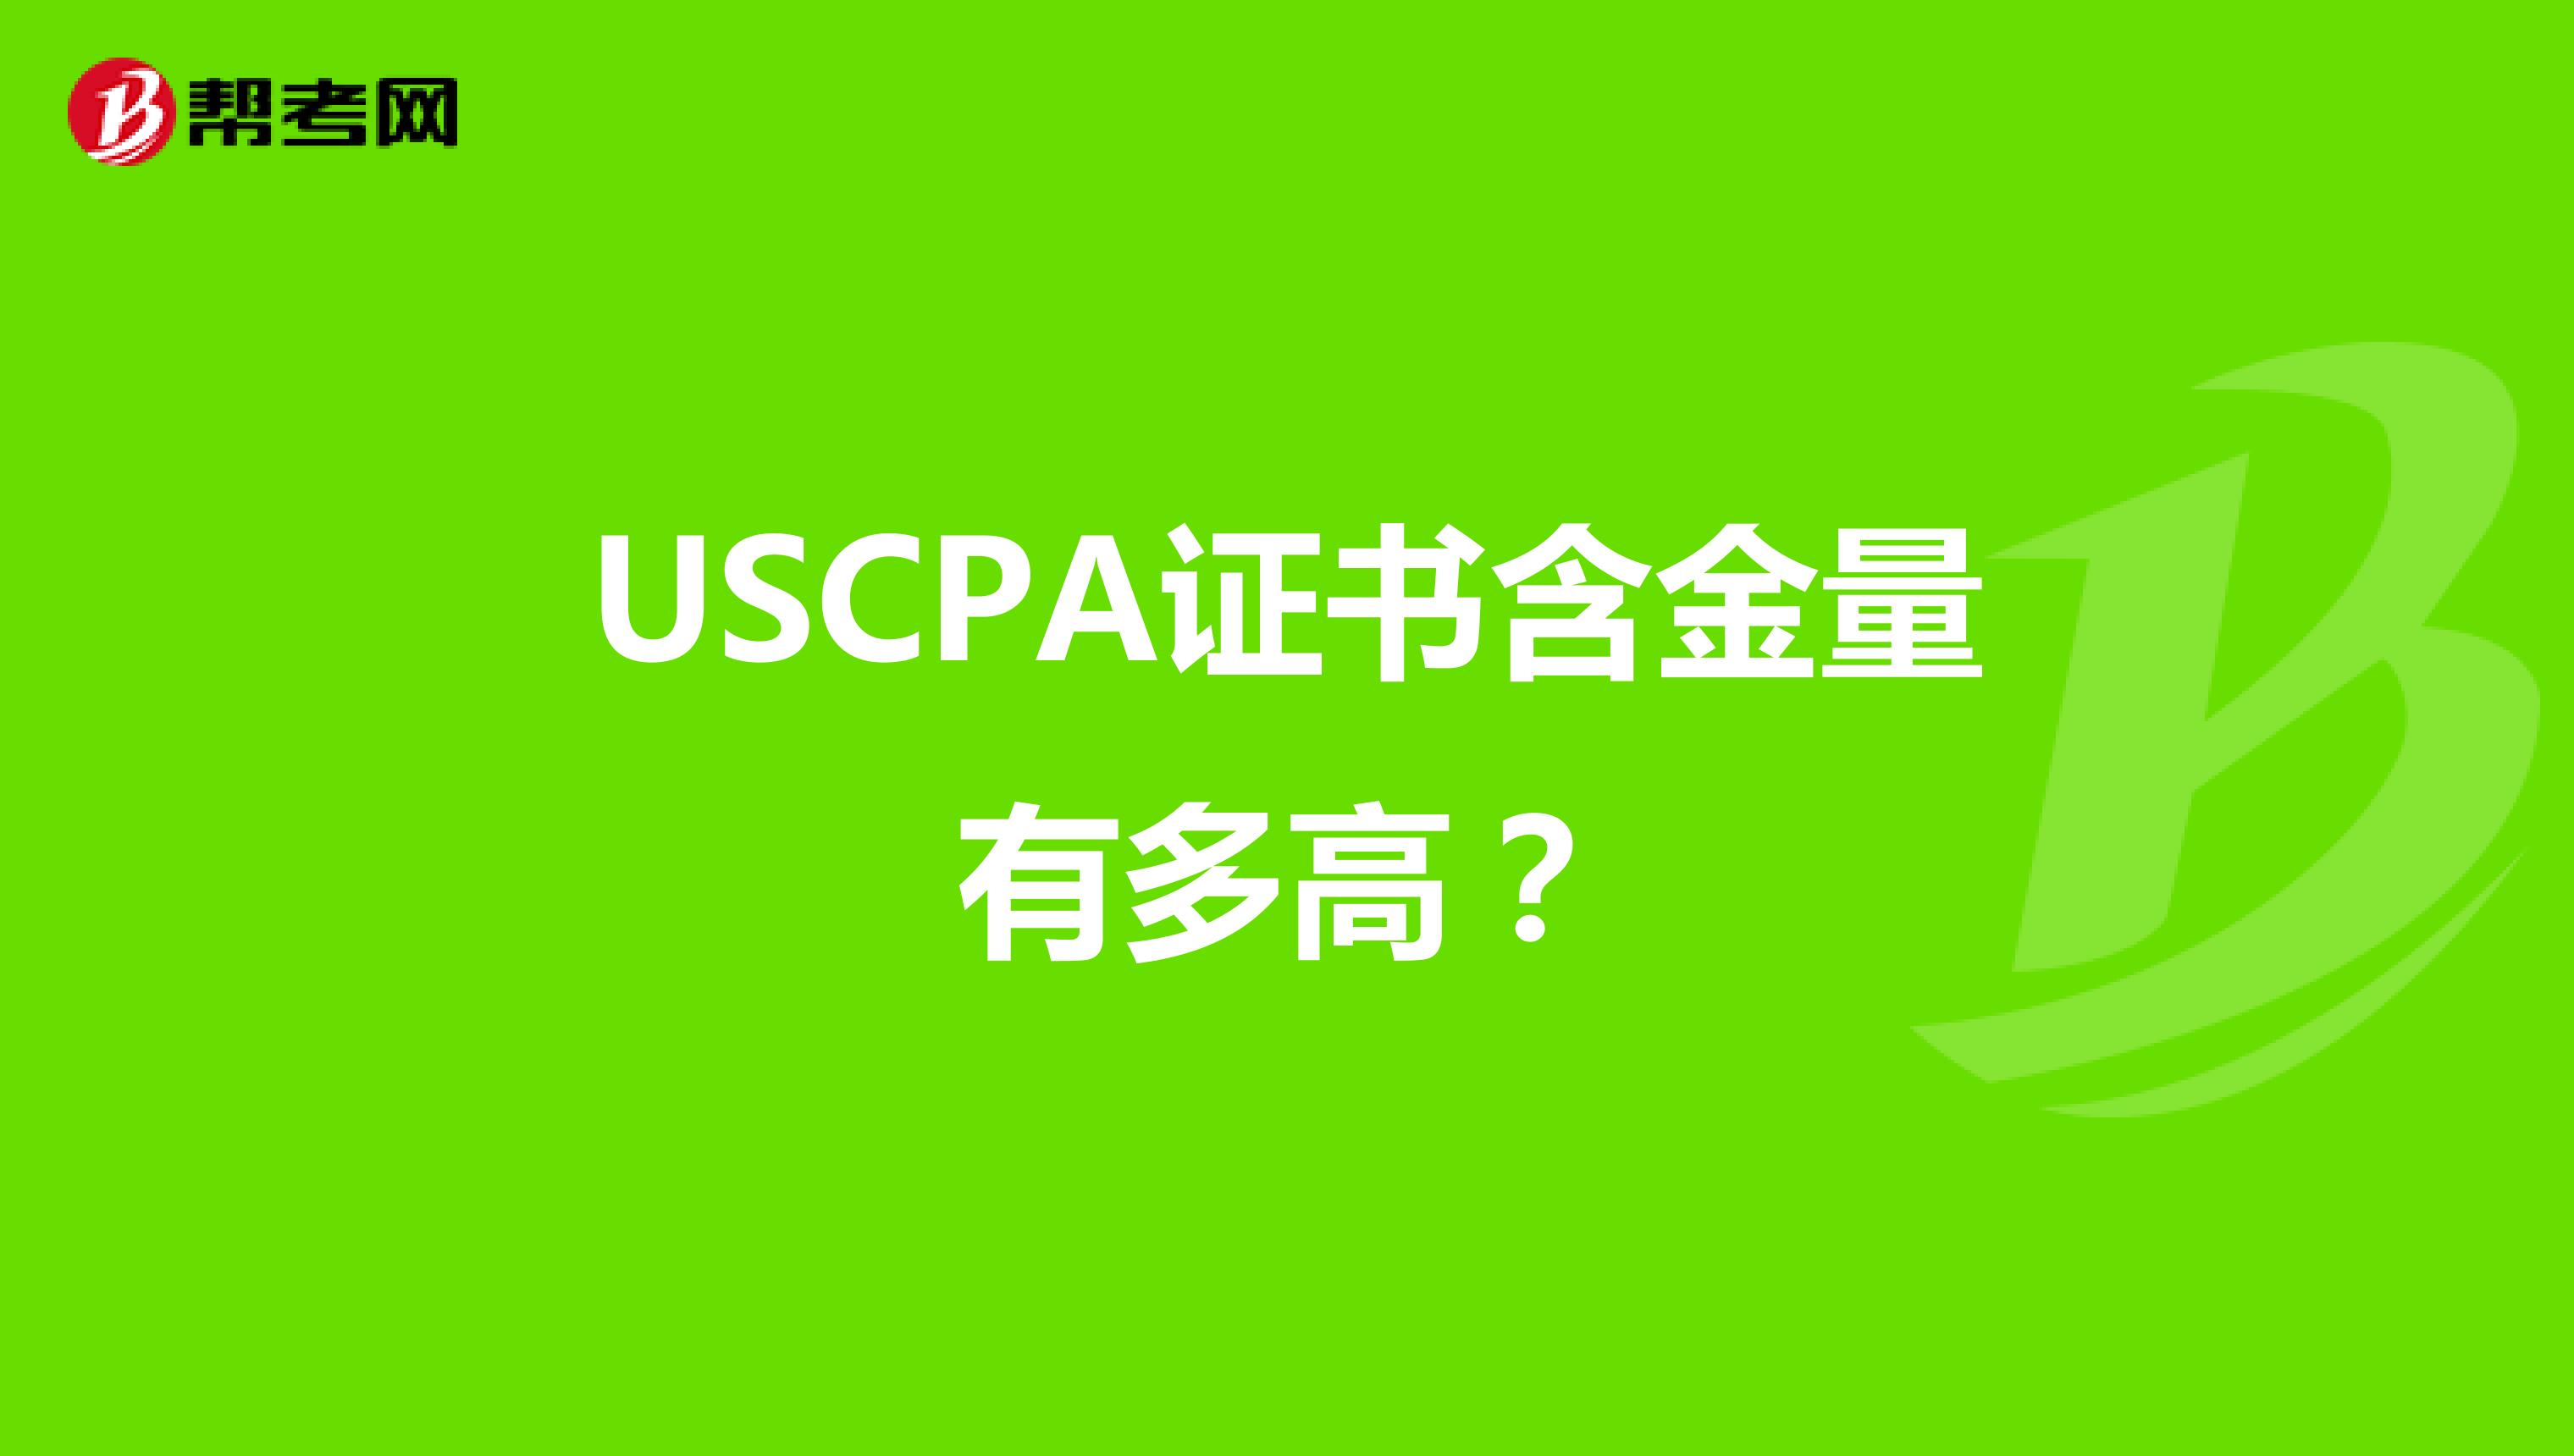 USCPA证书含金量有多高？